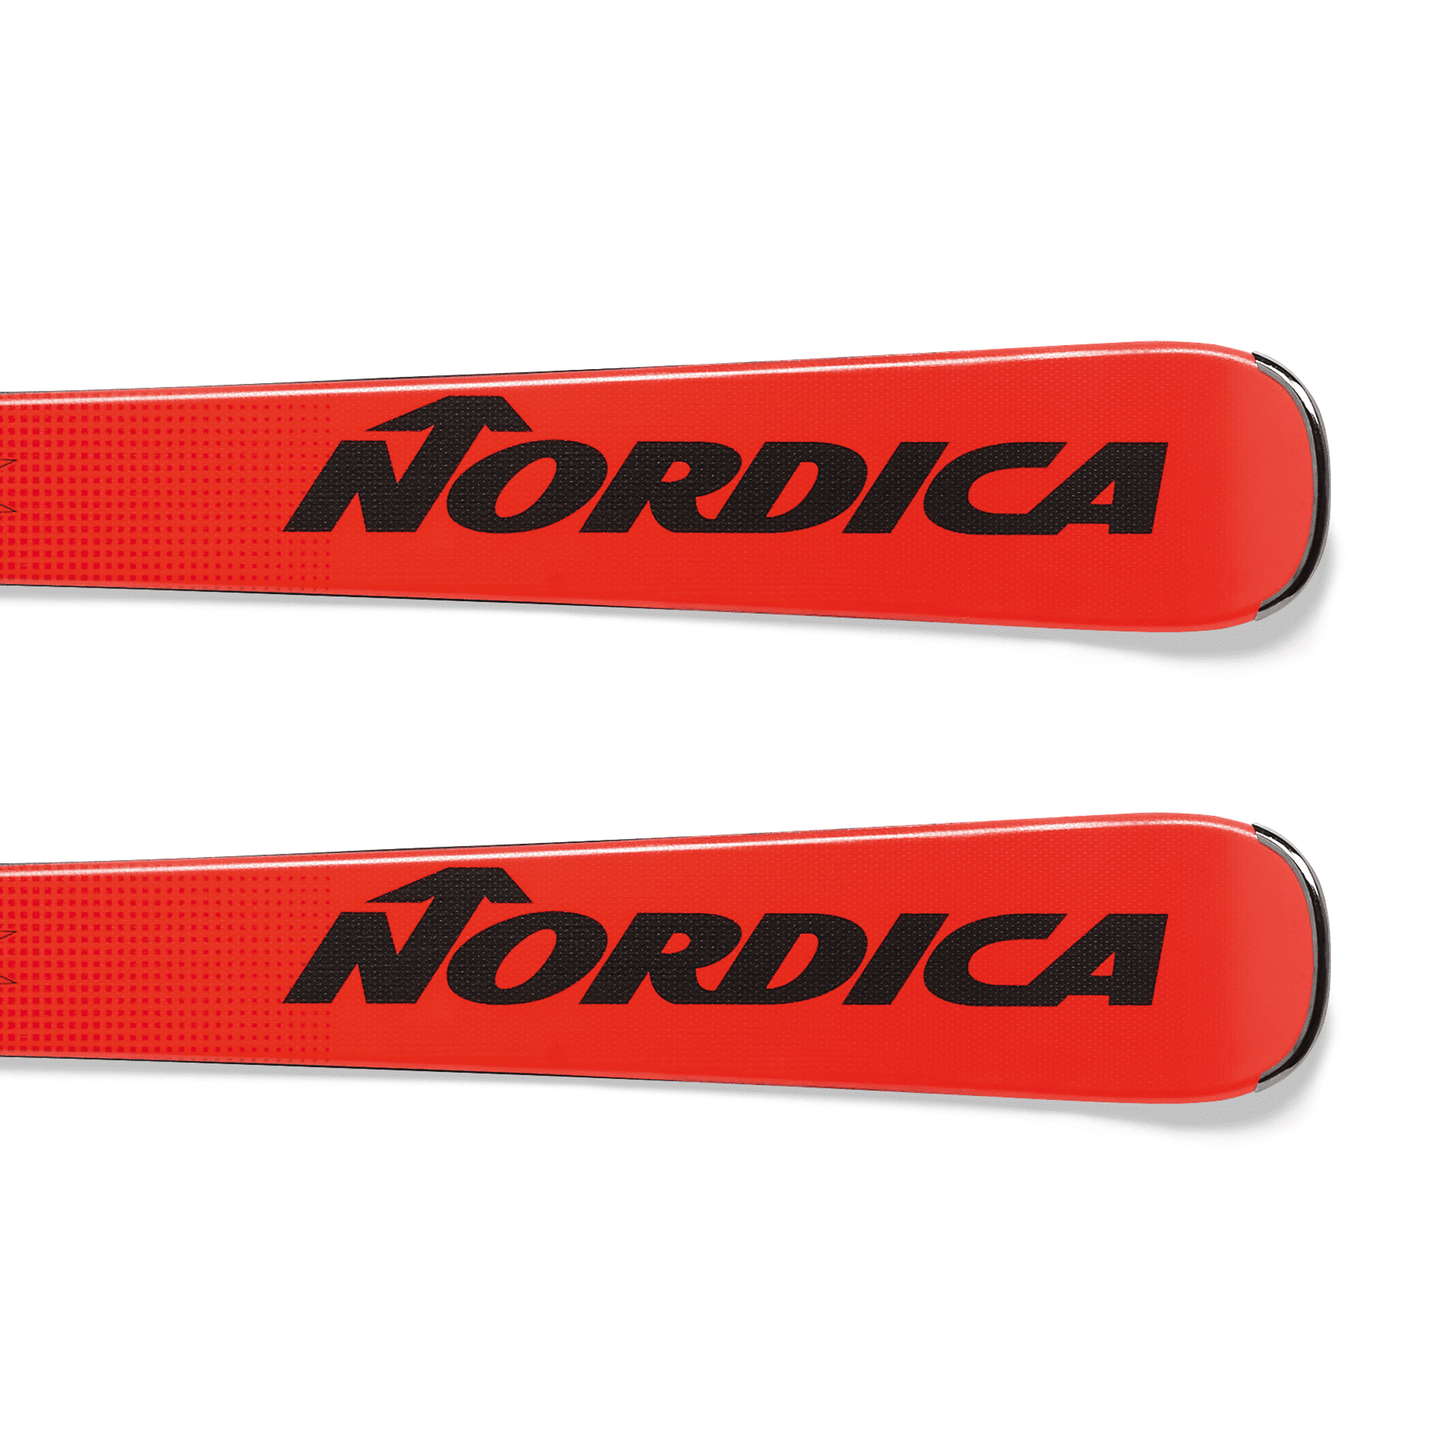 Nordica Doberman Spitfire 70 Ti Skis Inc TPX 12 Bindings (2022)